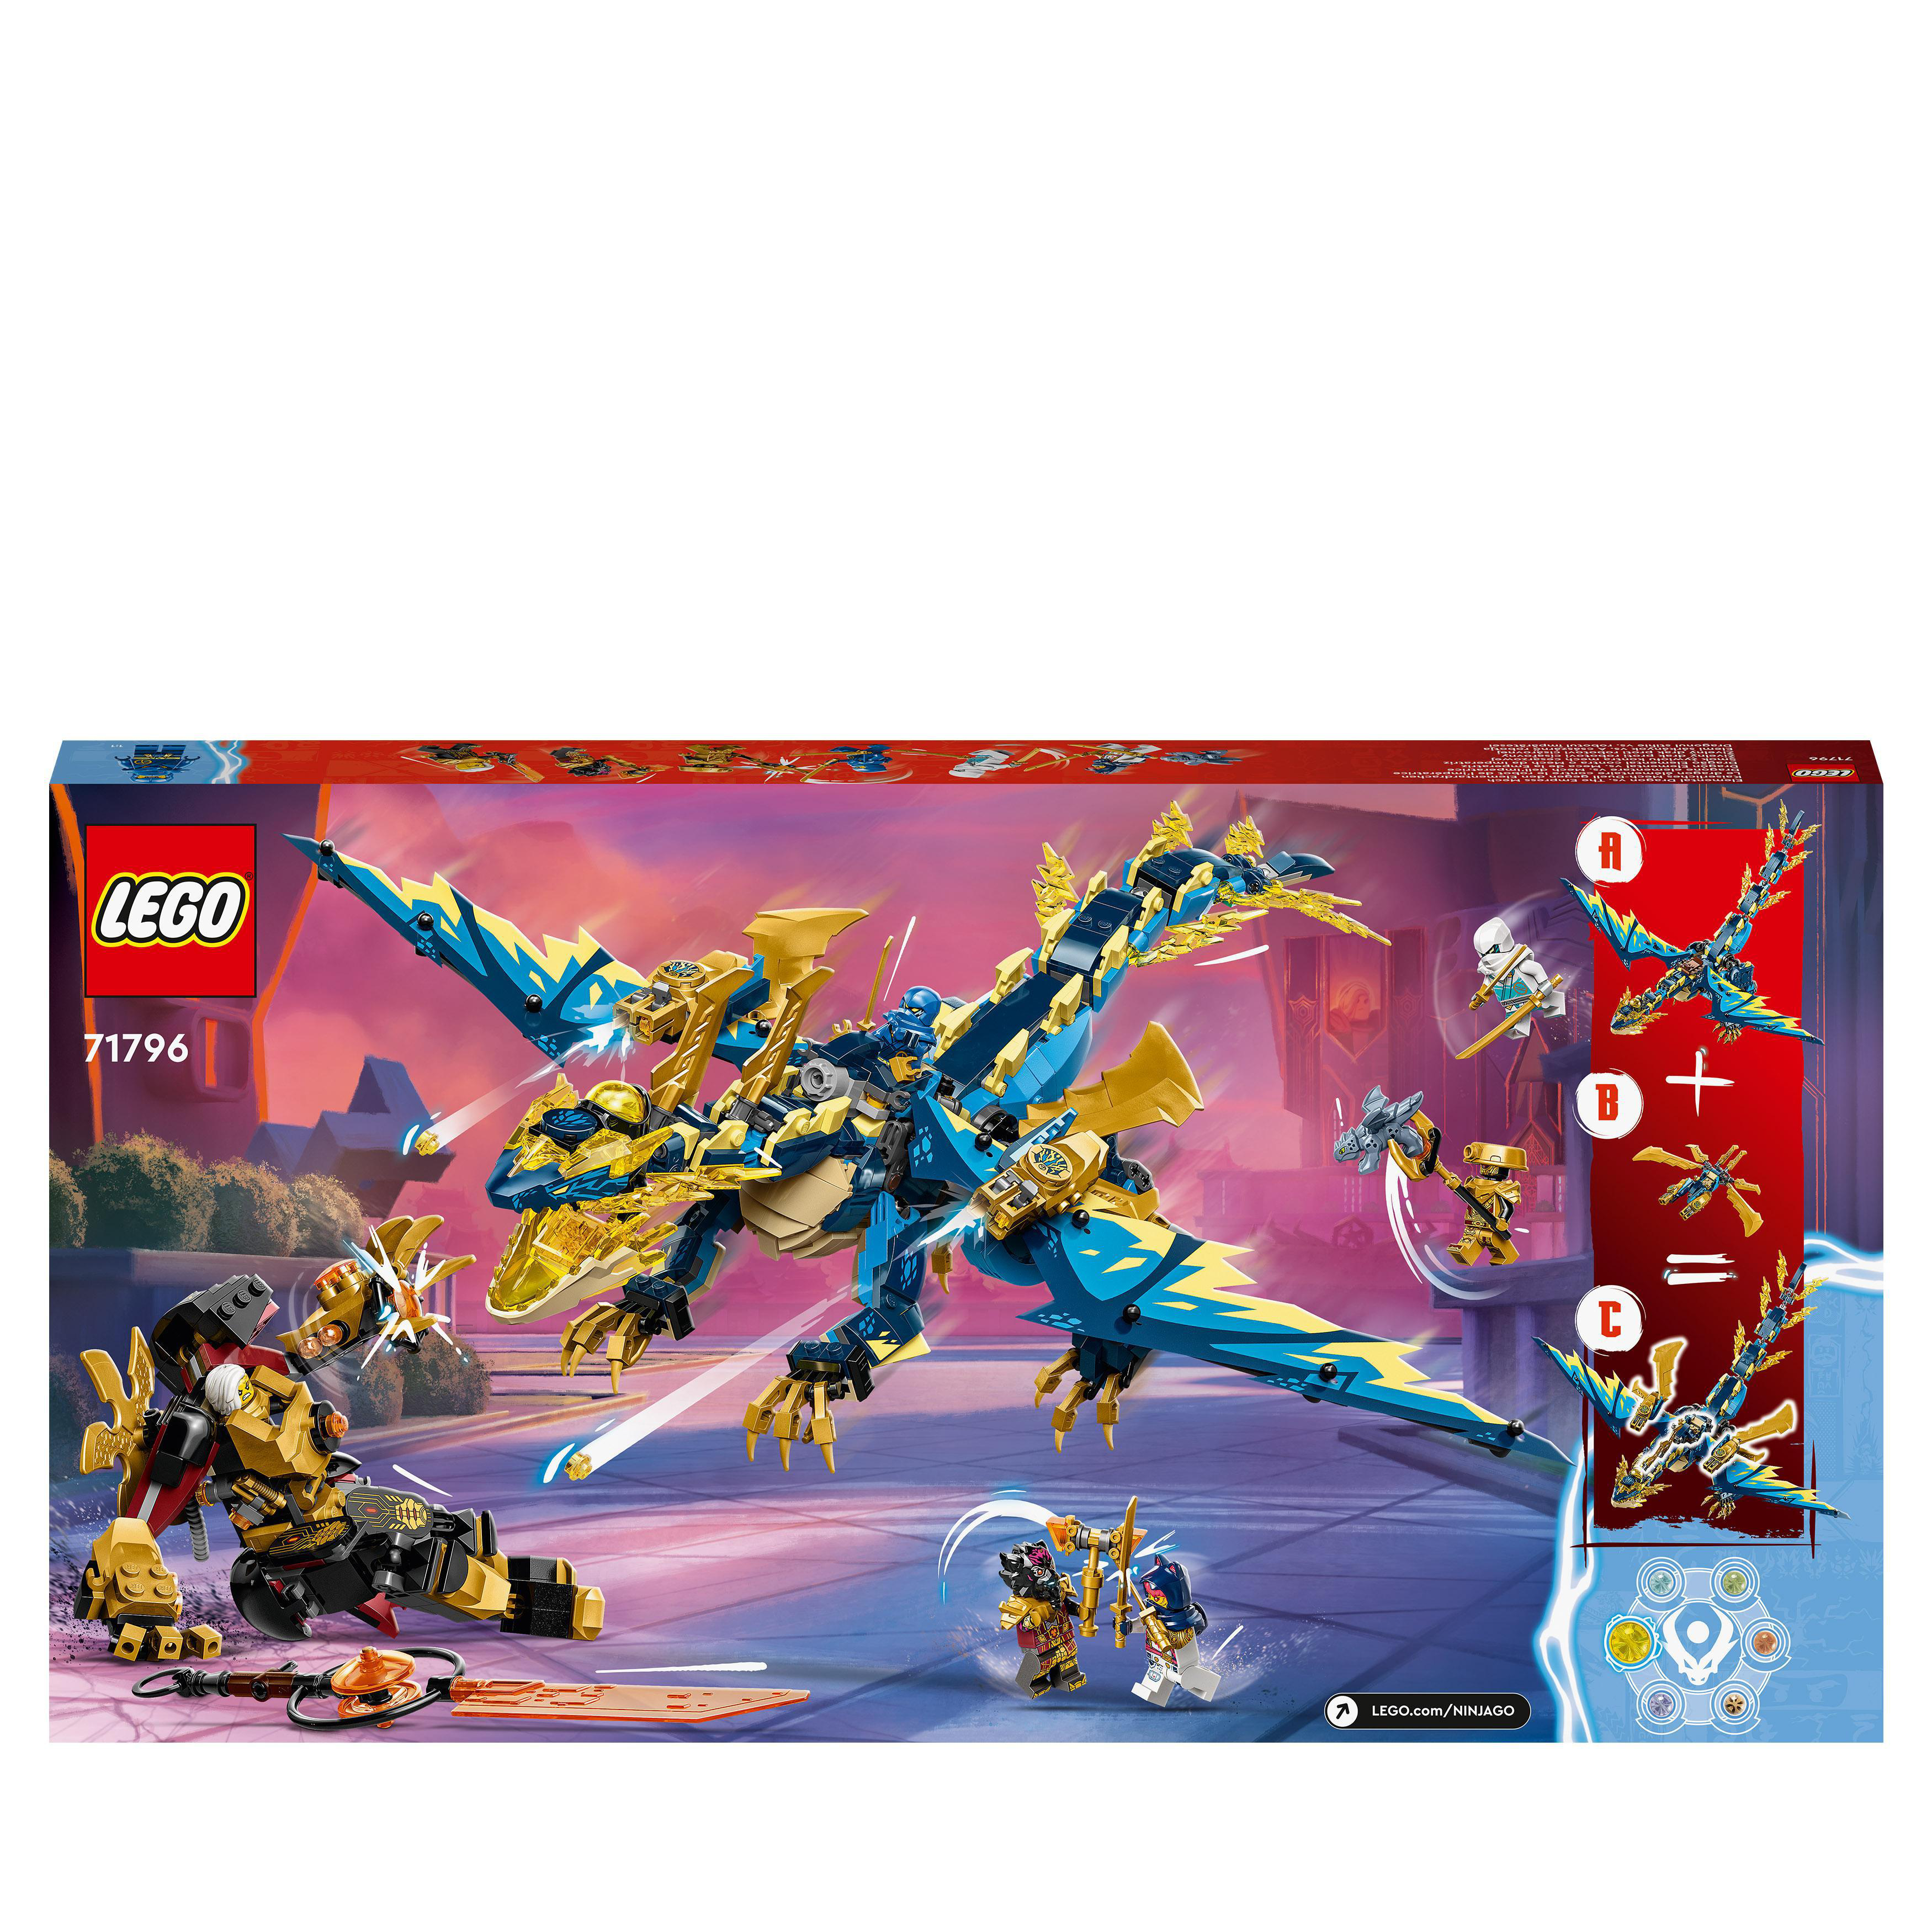 Mehrfarbig den LEGO 71796 NINJAGO Elementardrachen gegen Bausatz, Kaiserliches Mech-Duell